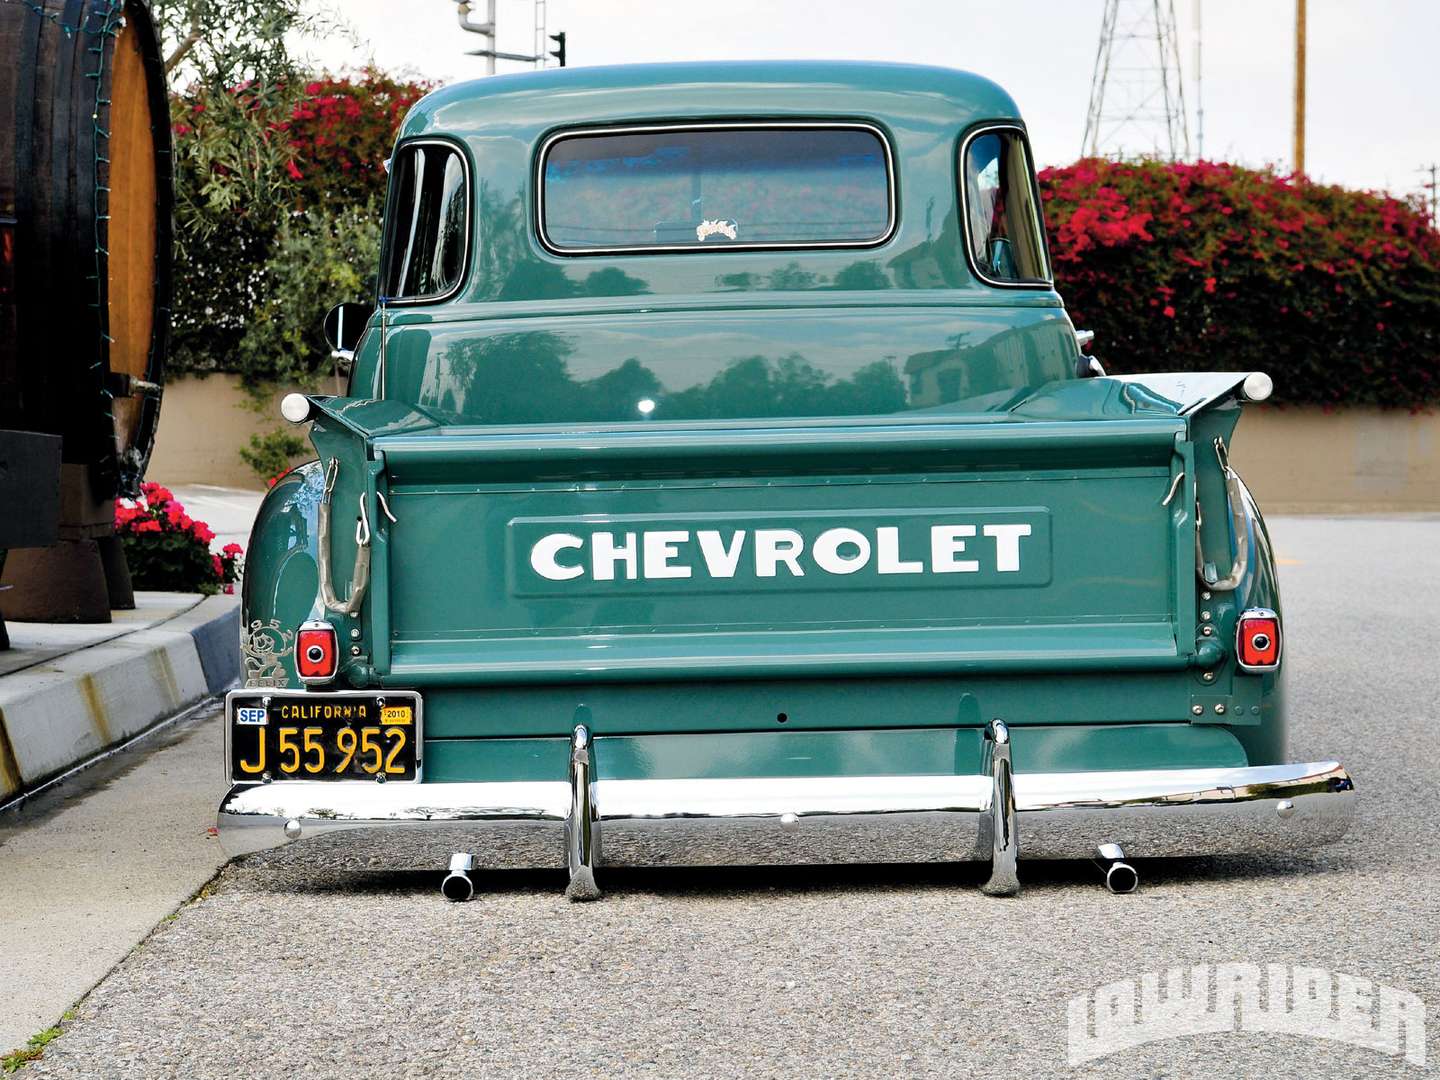 Chevrolet Truck #9655476